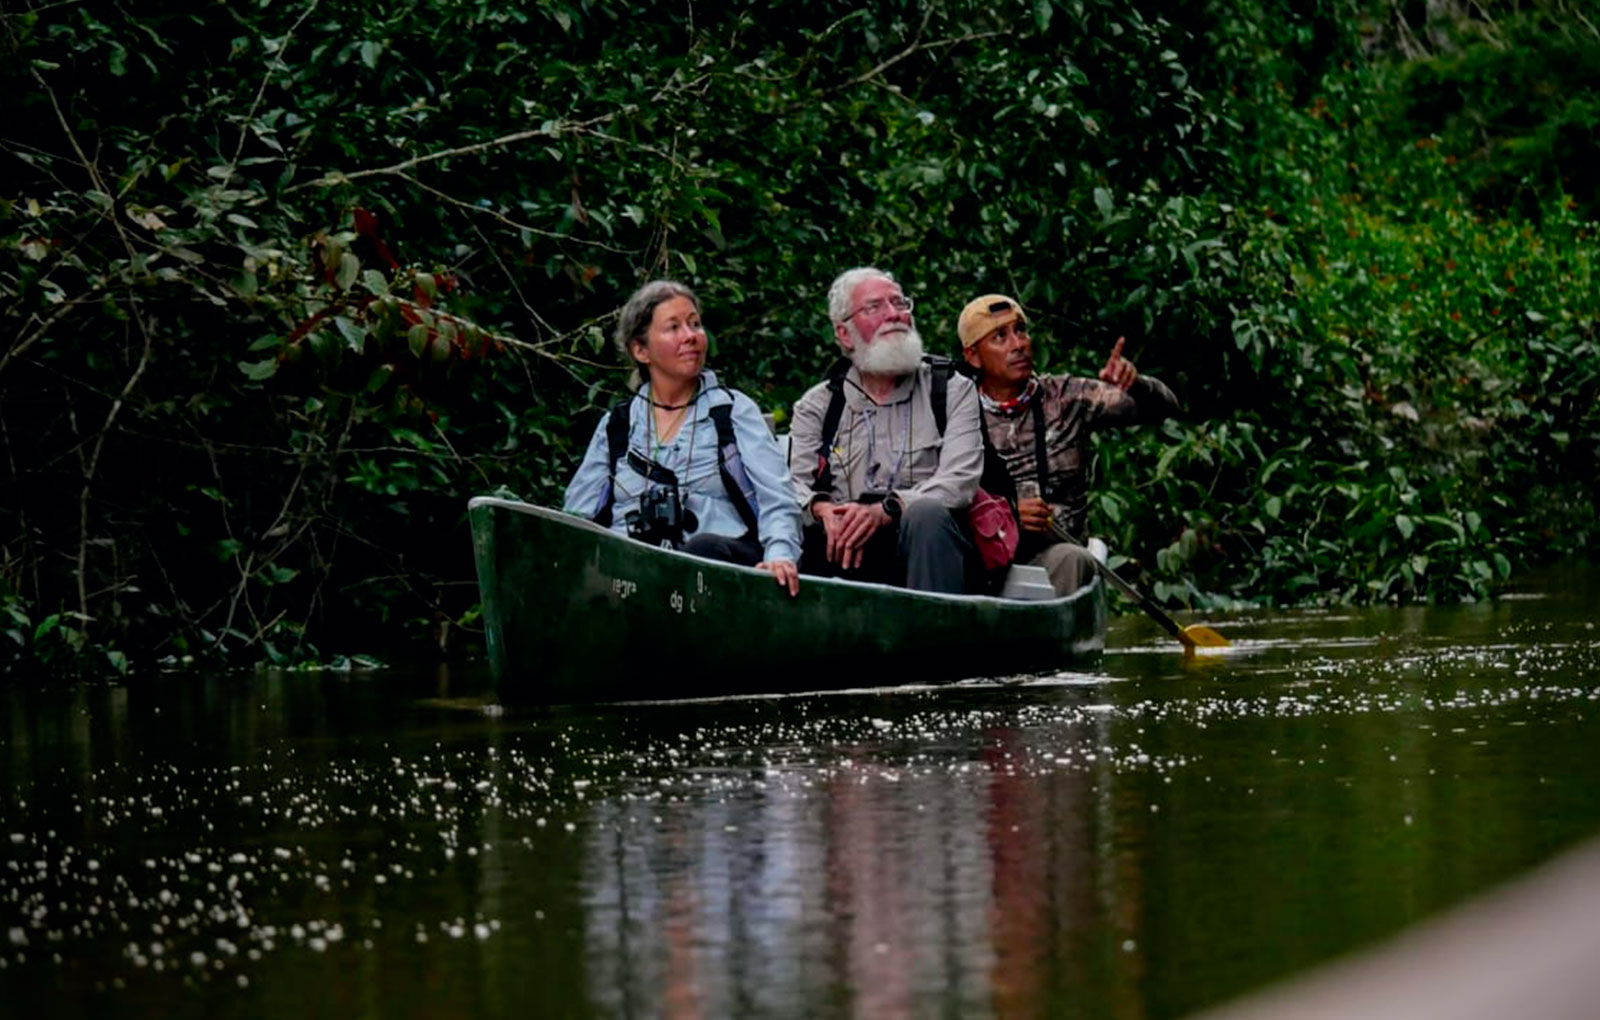 Paddling tour in the Amazon, in Cuyabeno Ecuador